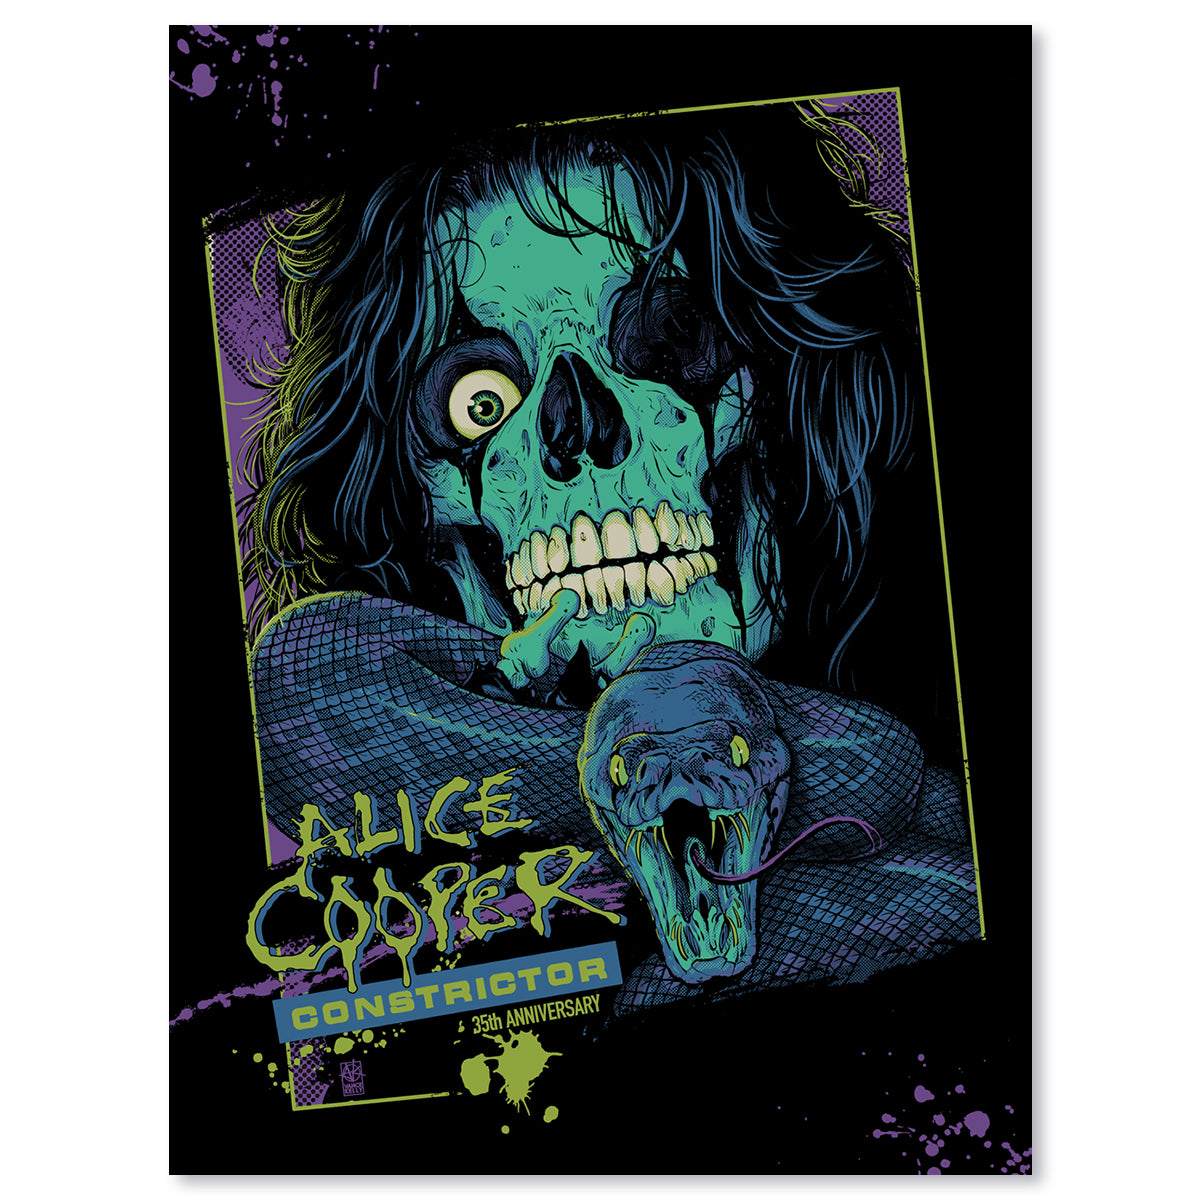 Alice Cooper Constrictor 35th Anniversary